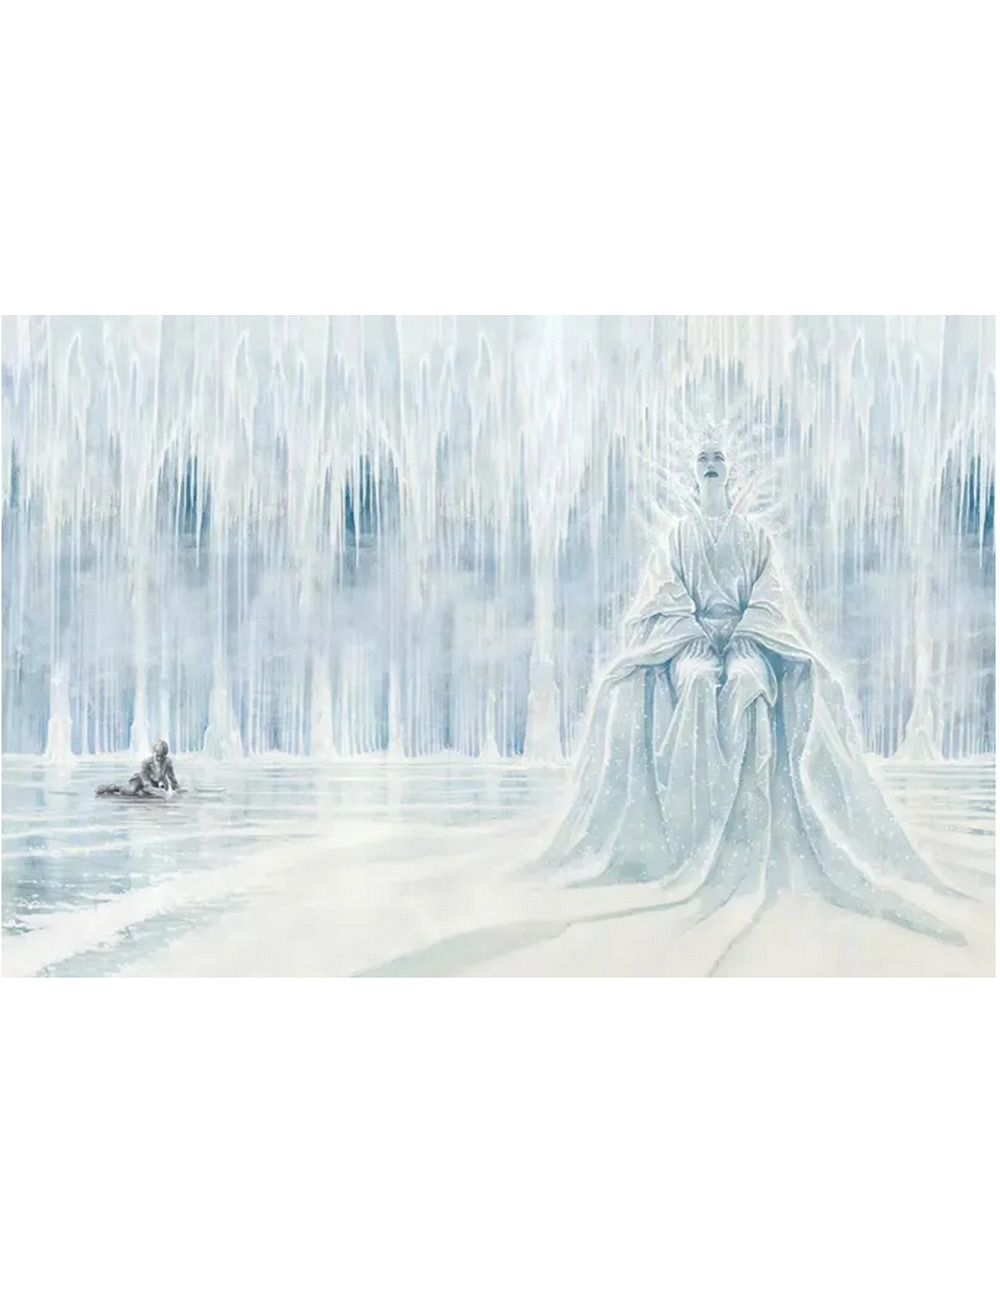 Рисунок Снежная Королева Ганс христиан Андерсен легко